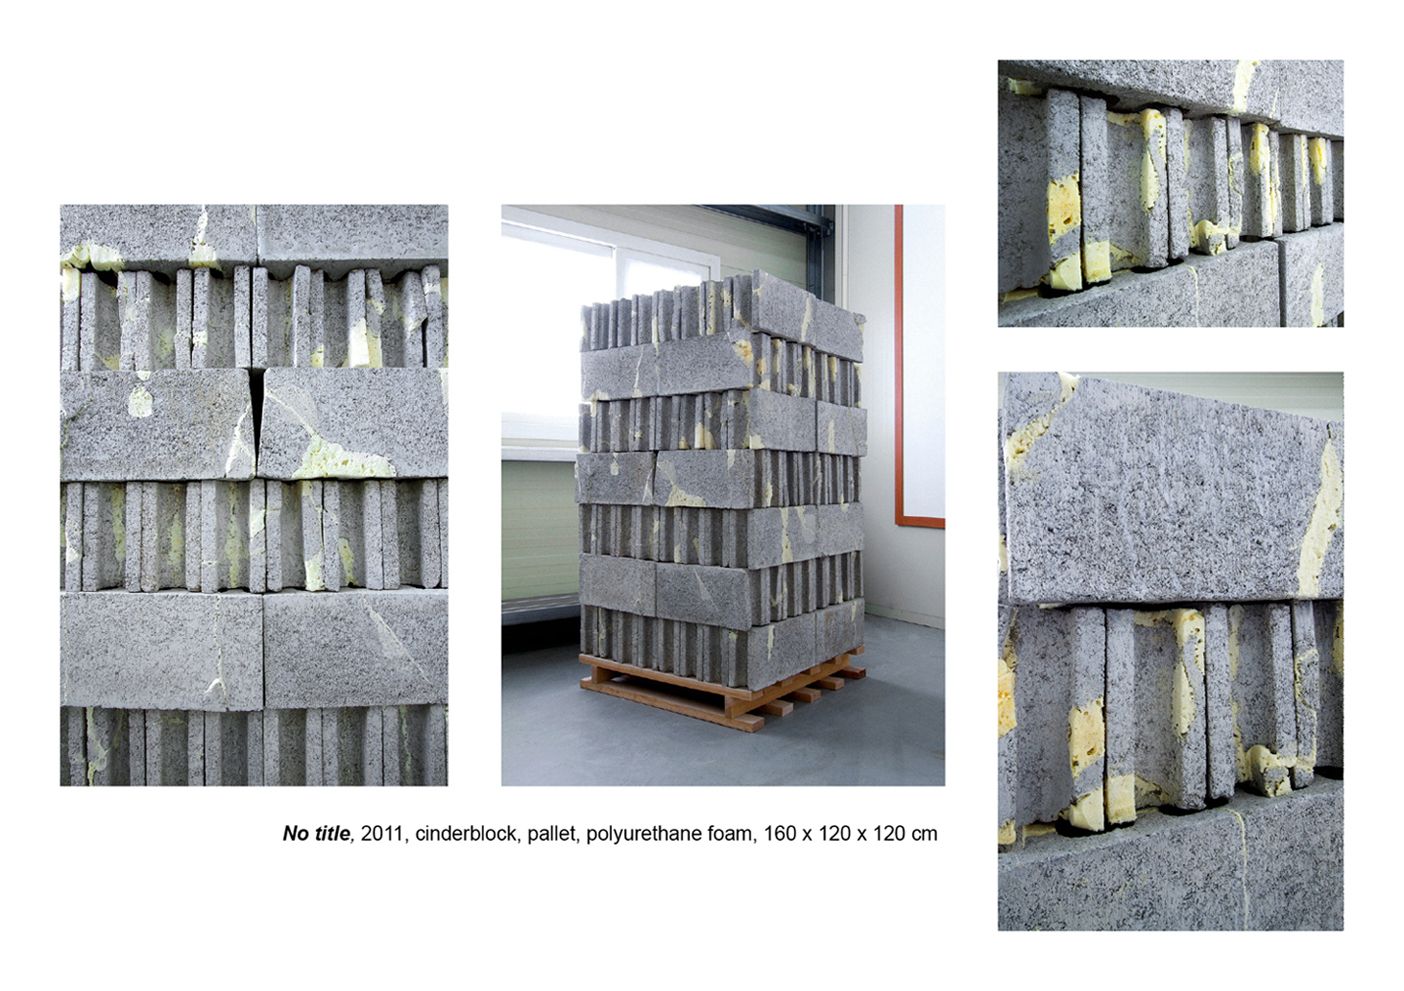 No title, 2011, cinderblock, pallet, polyurethane foam, 160 x 120 x 120 cm